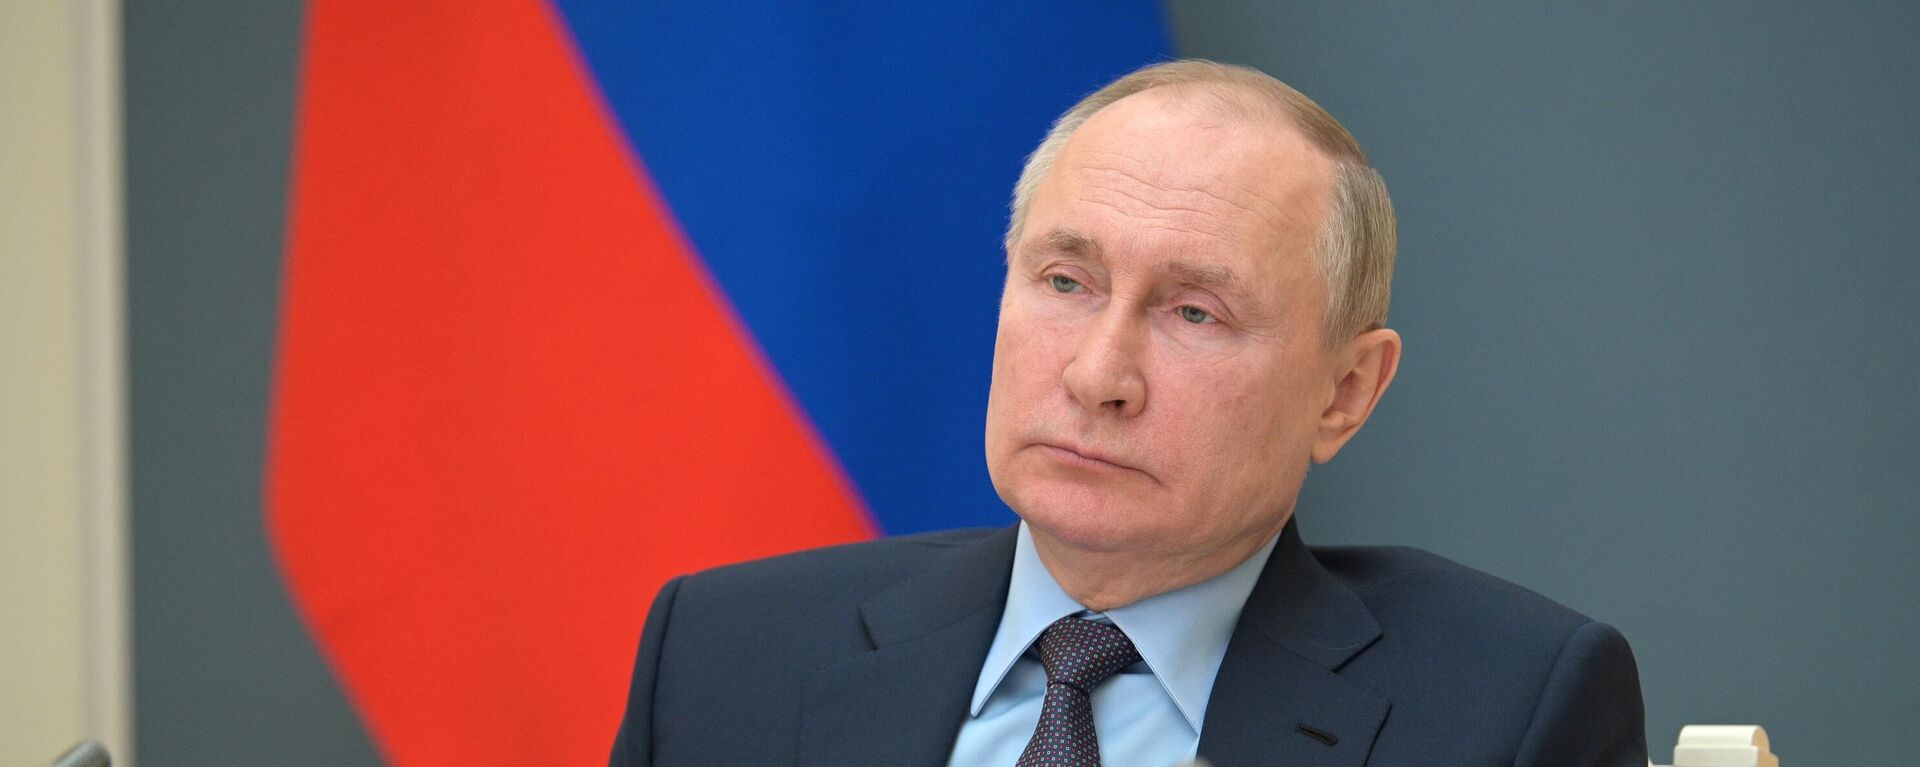 Vladímir Putin, el presidente ruso - Sputnik Mundo, 1920, 11.06.2021